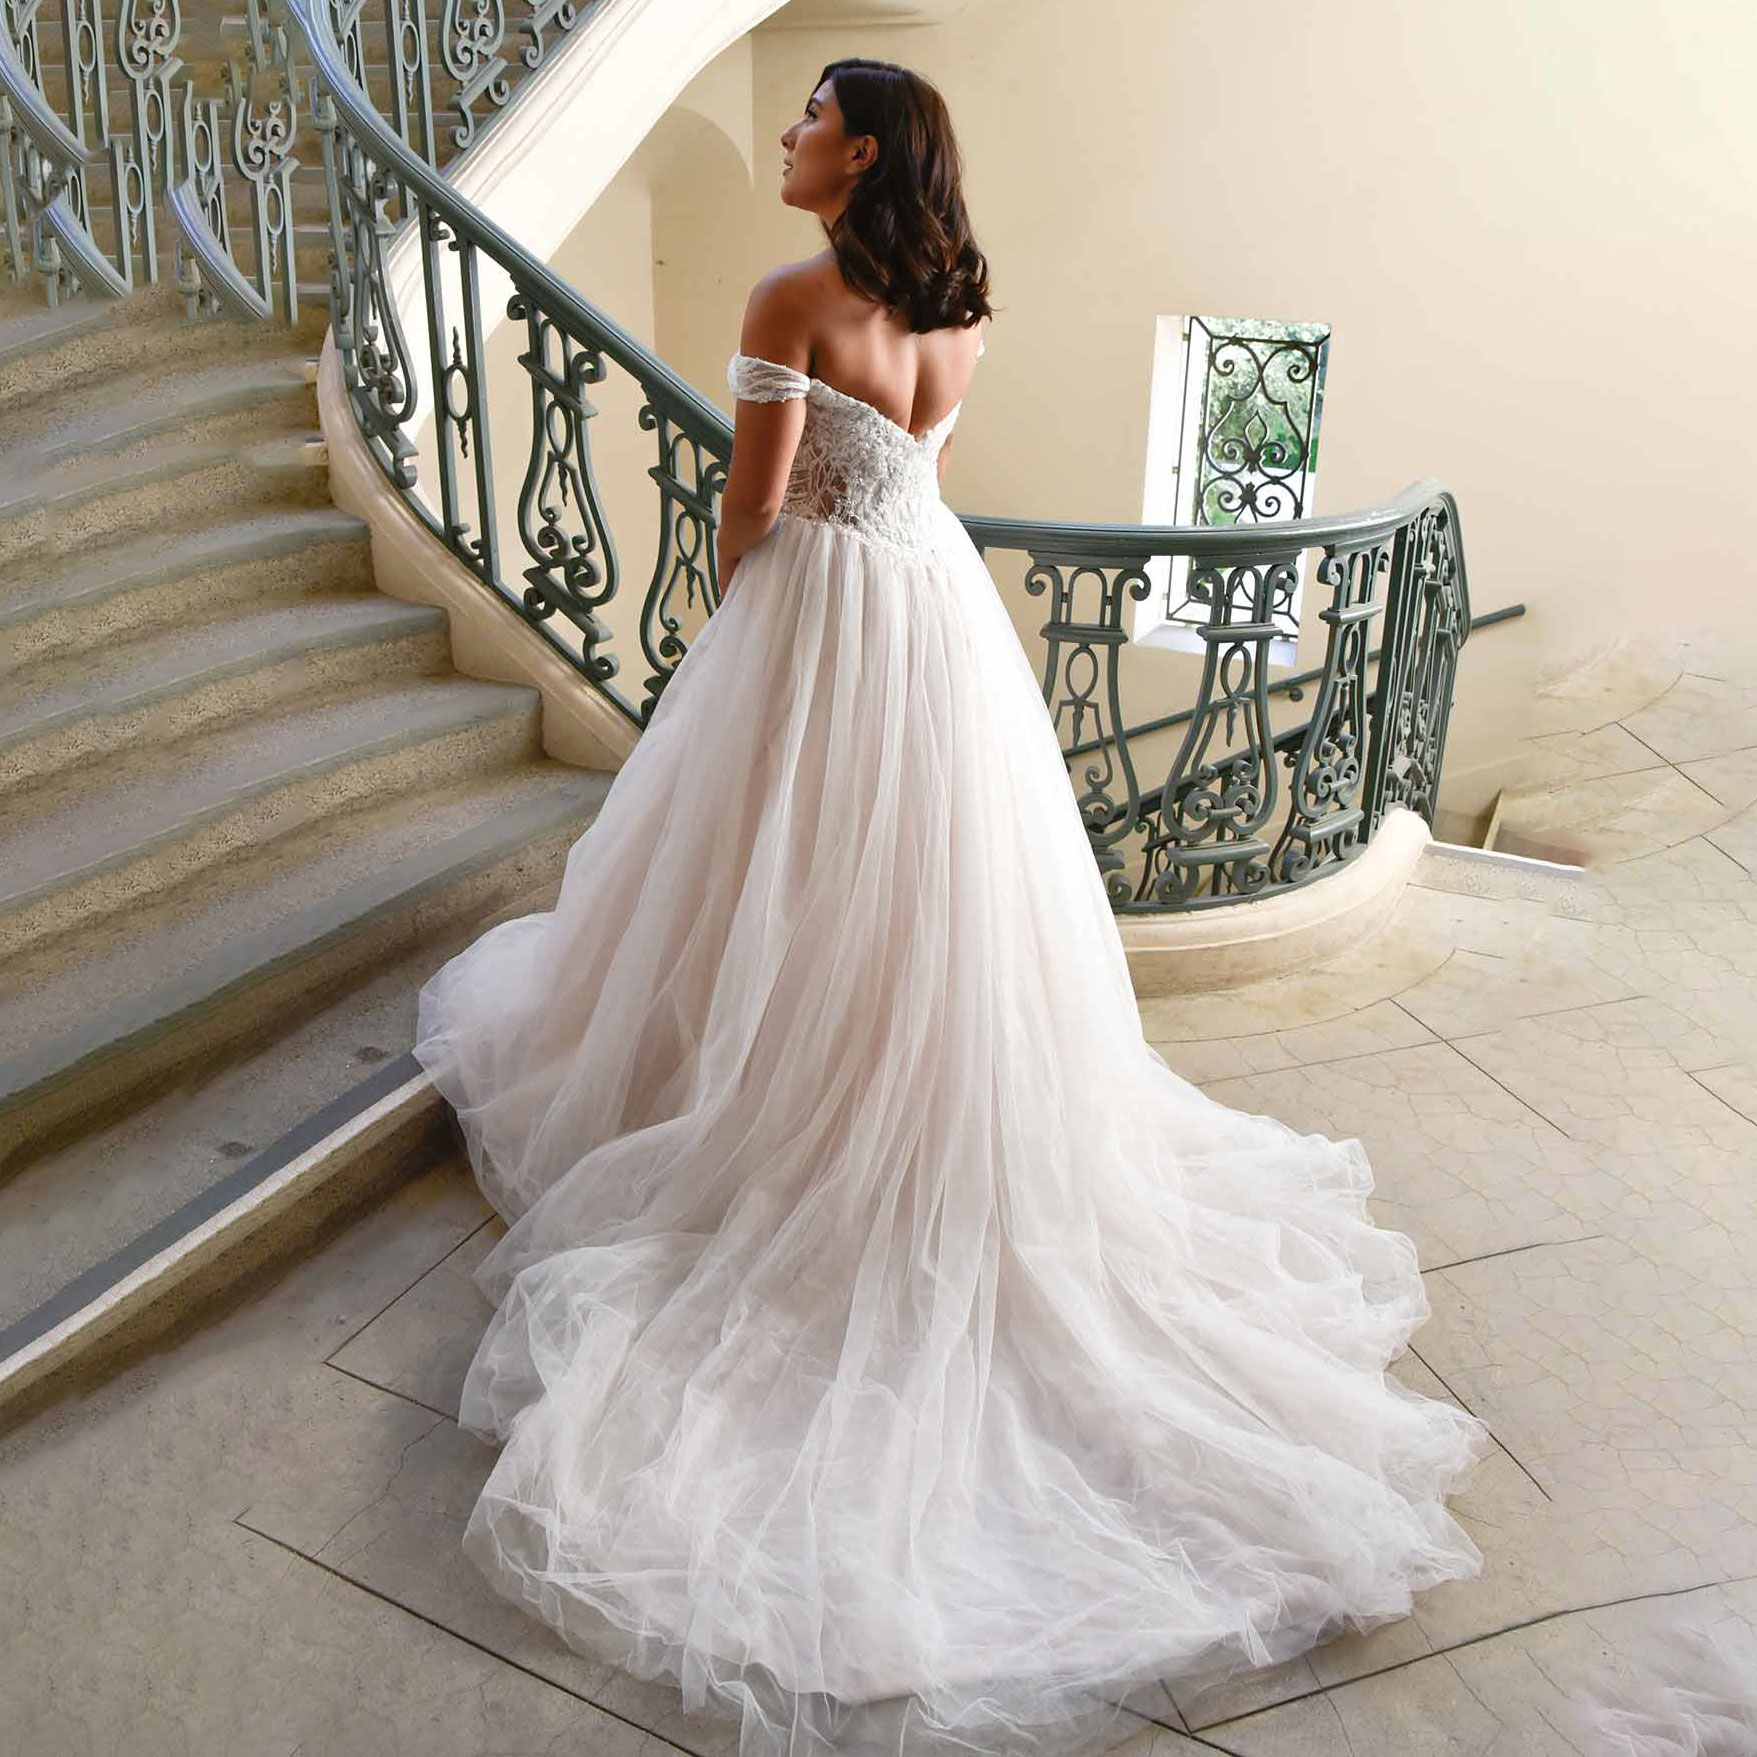 Beautiful ballgown wedding dress has sparkly tulle skirt